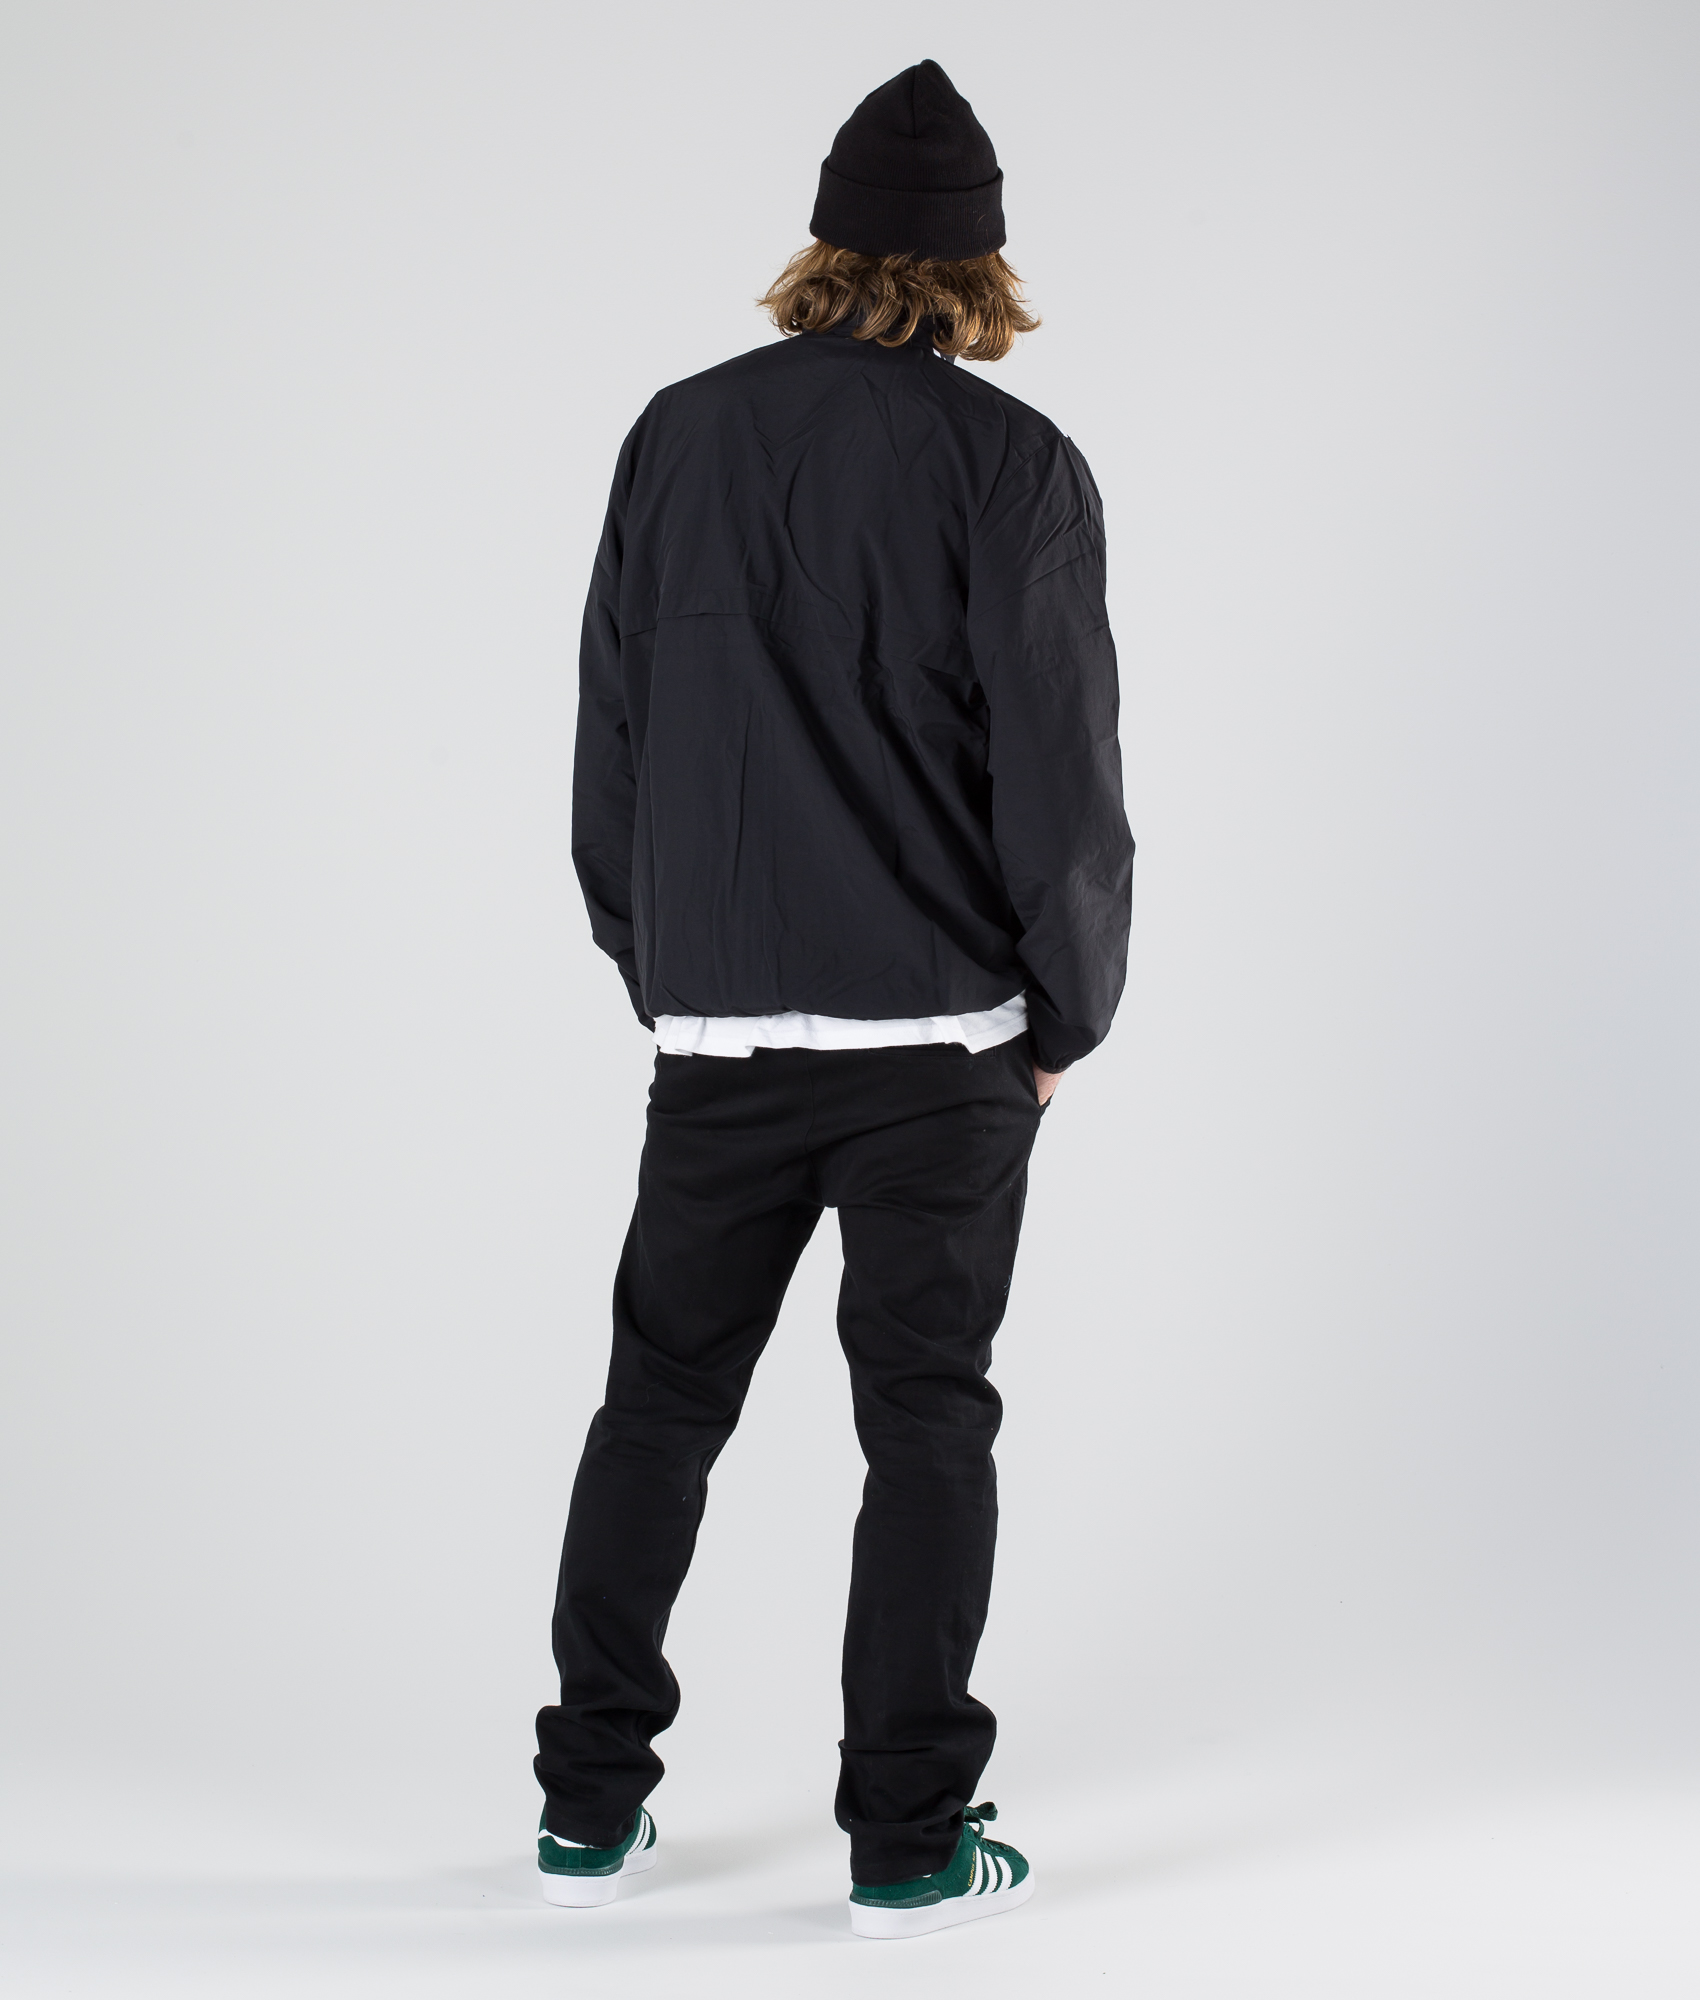 adidas originals men's skateboarding class action jacket